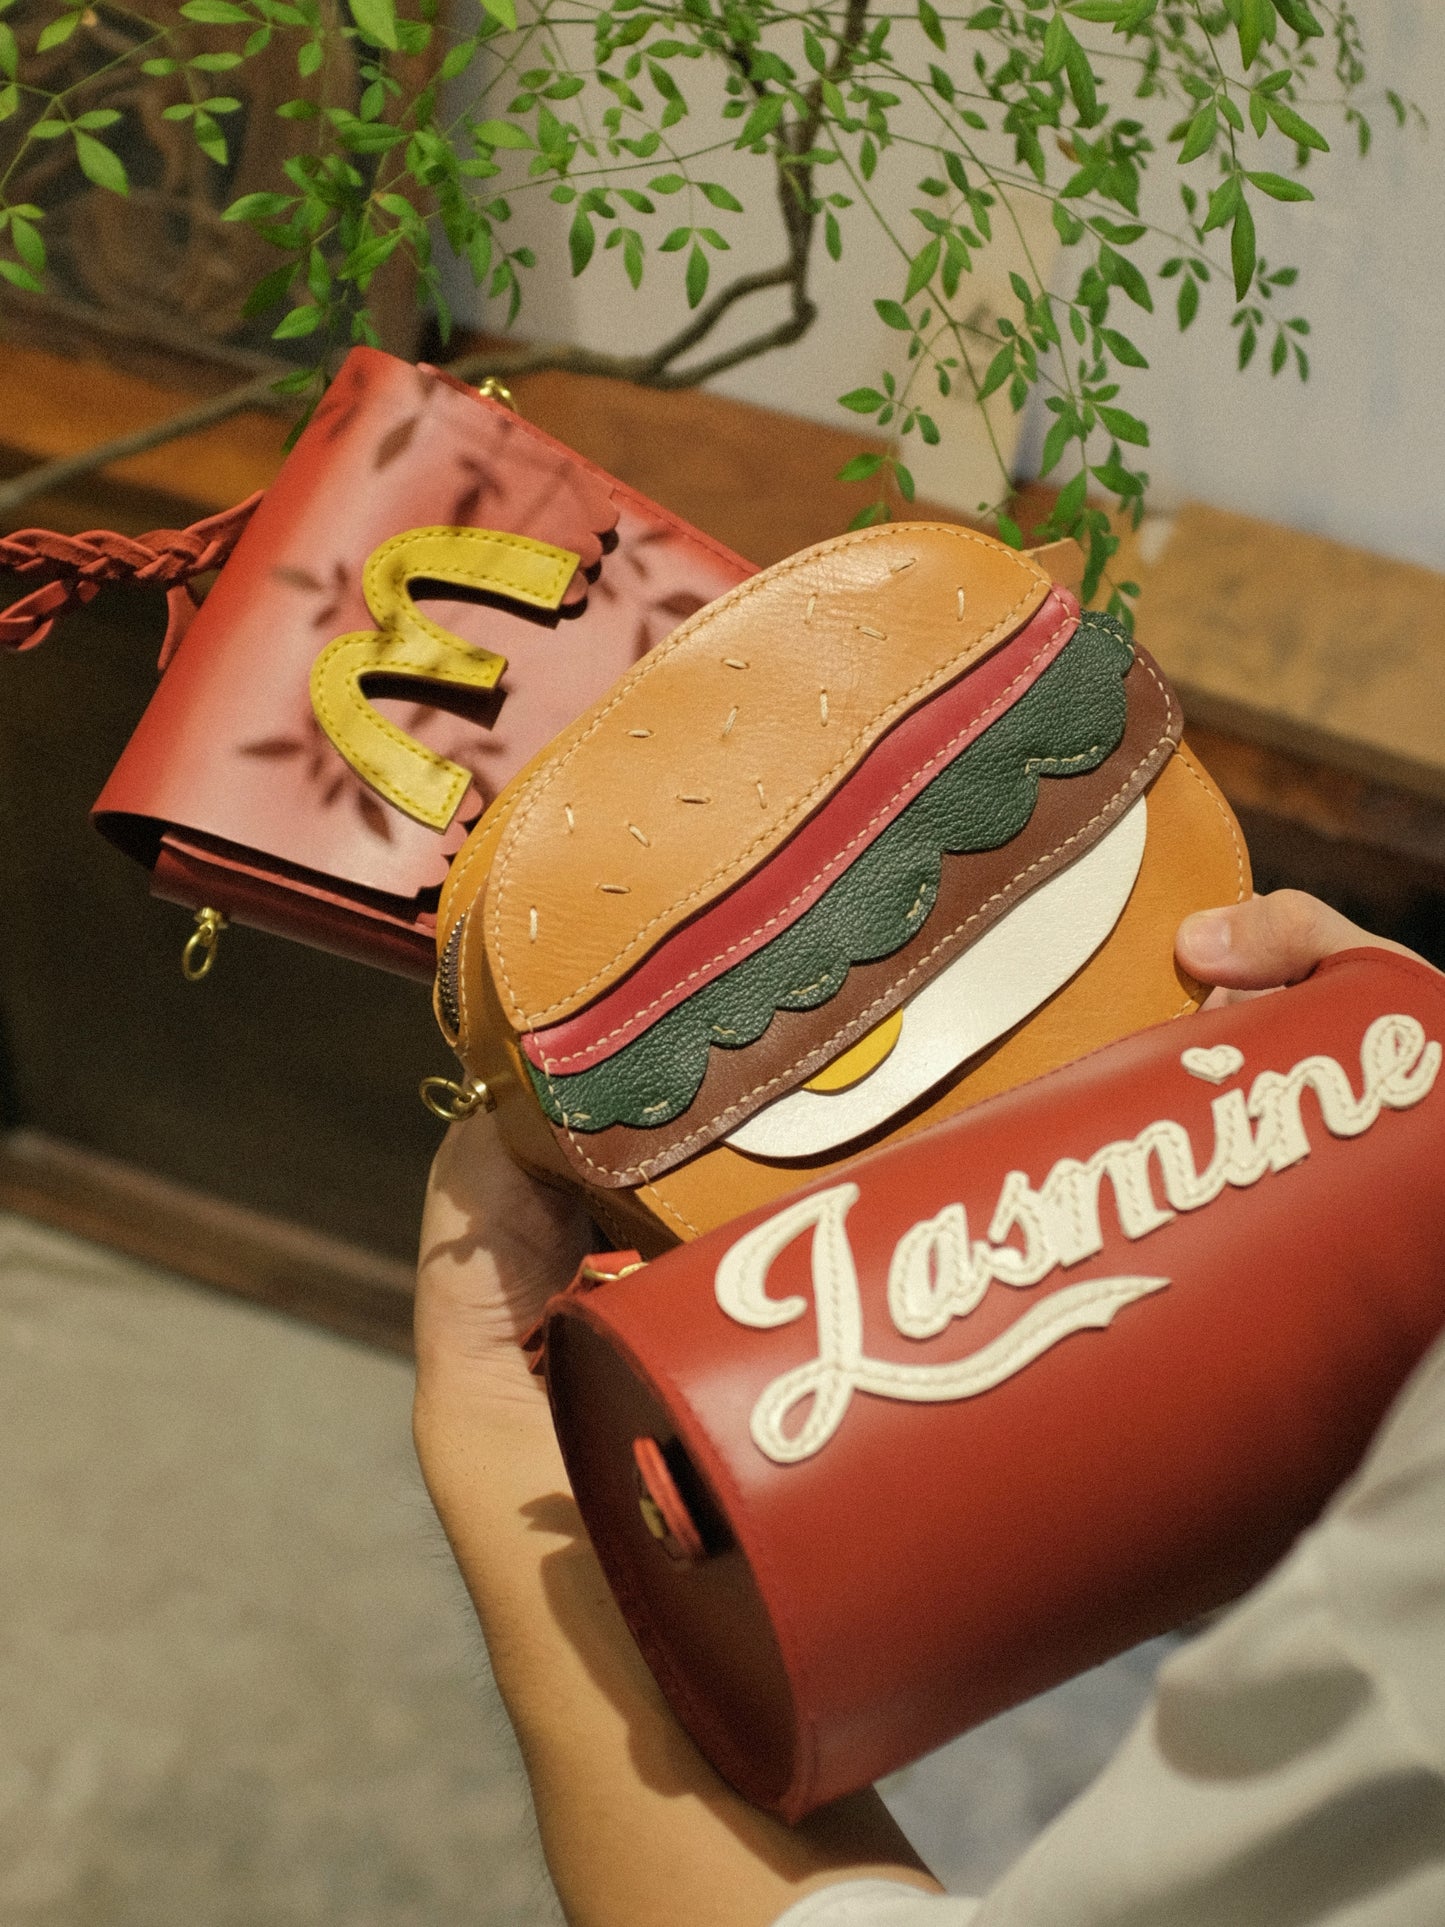 Hamburger handbag